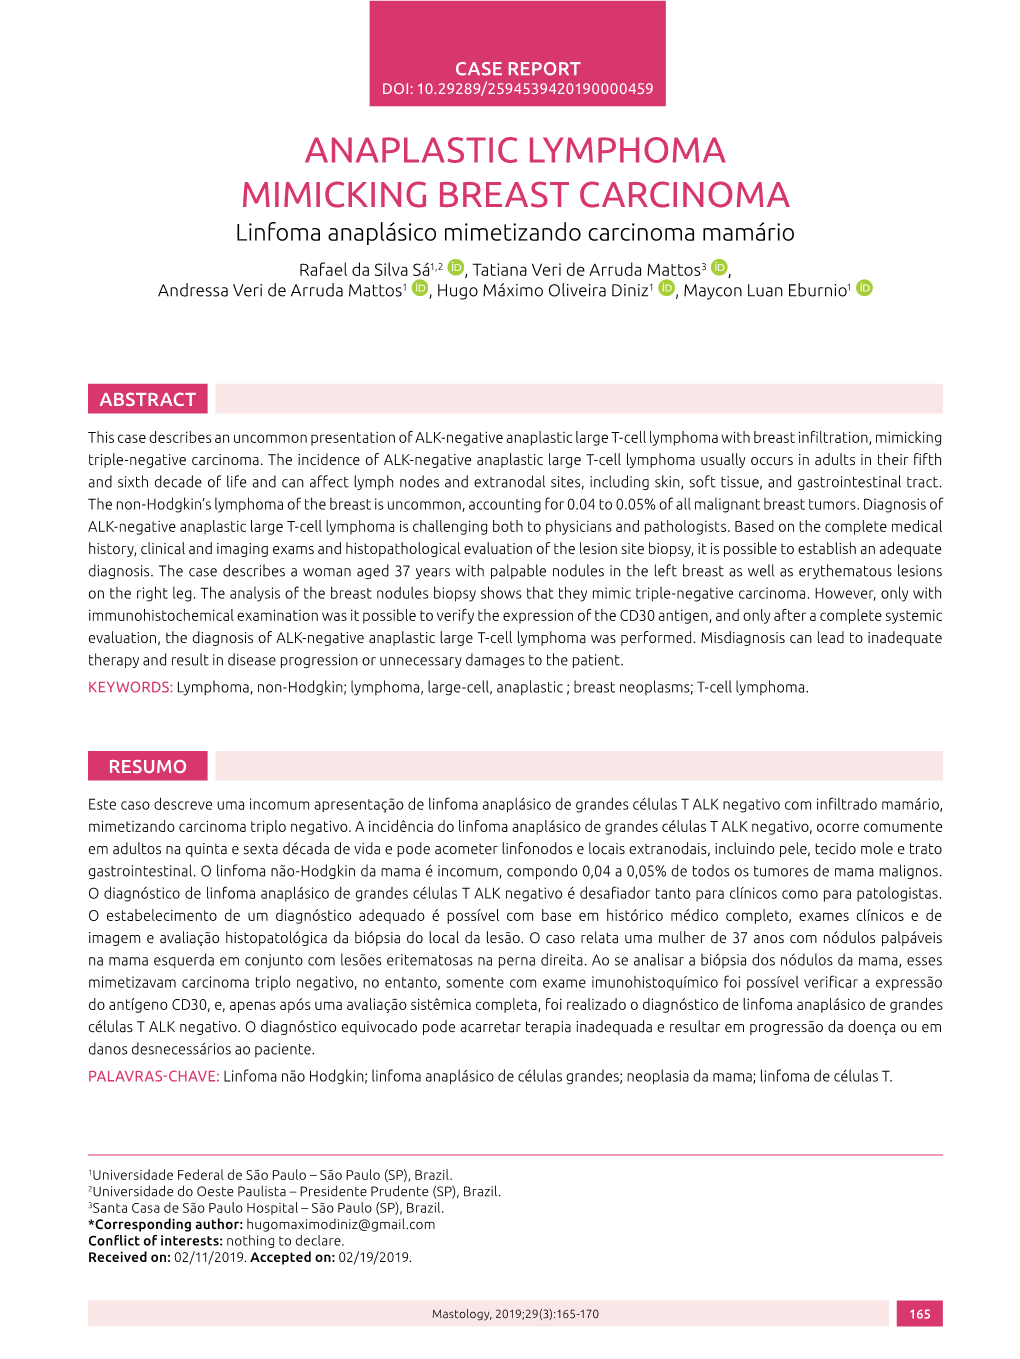 Anaplastic Lymphoma Mimicking Breast Carcinoma